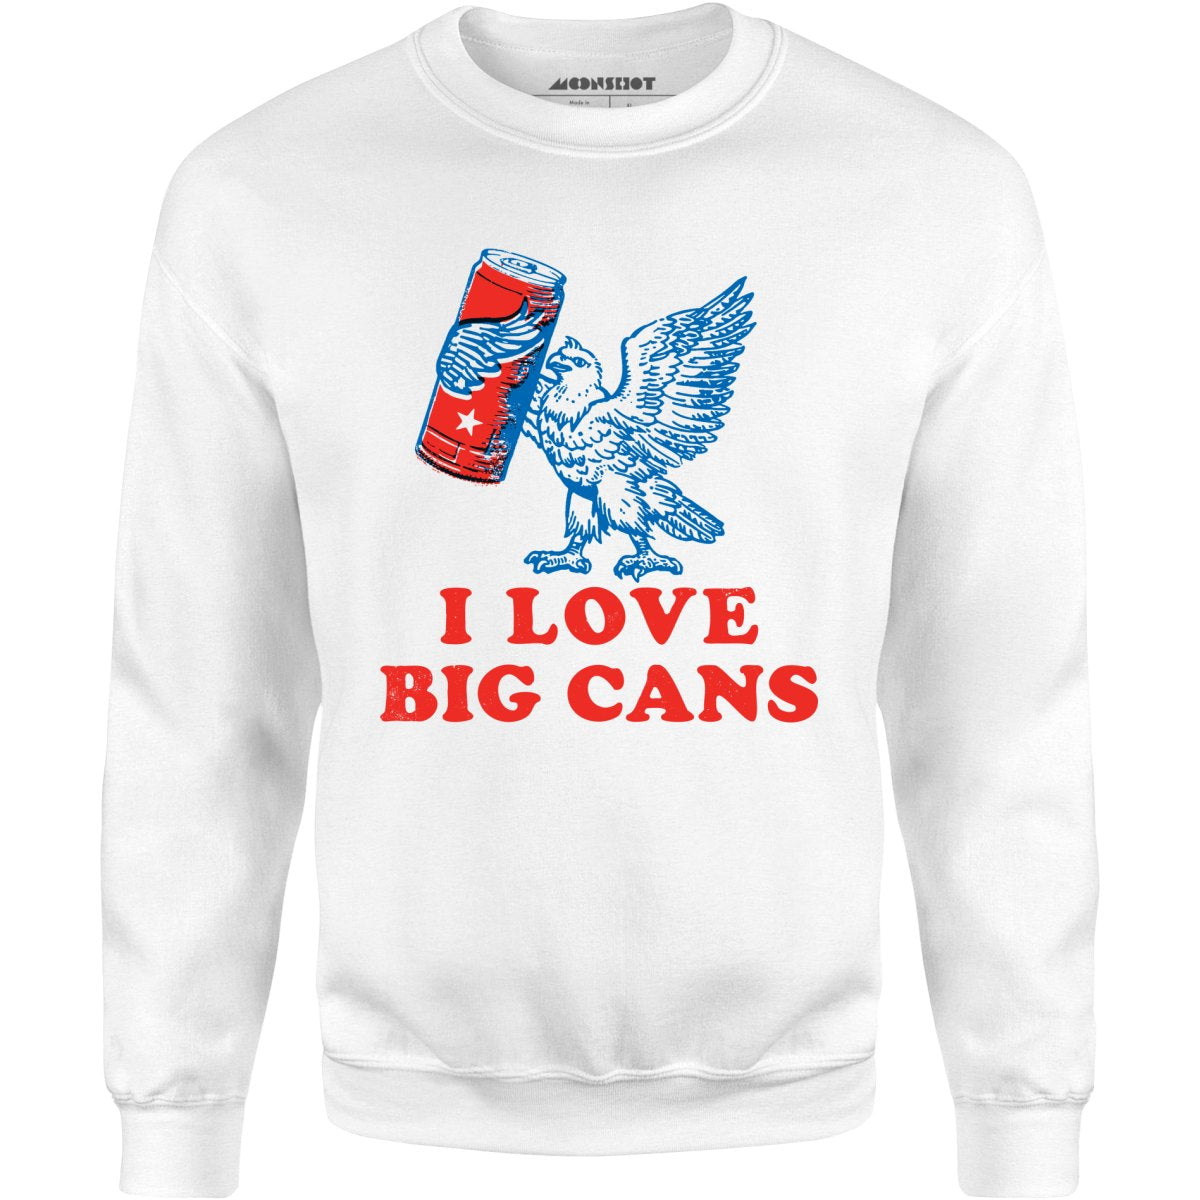 I Love Big Cans - Unisex Sweatshirt